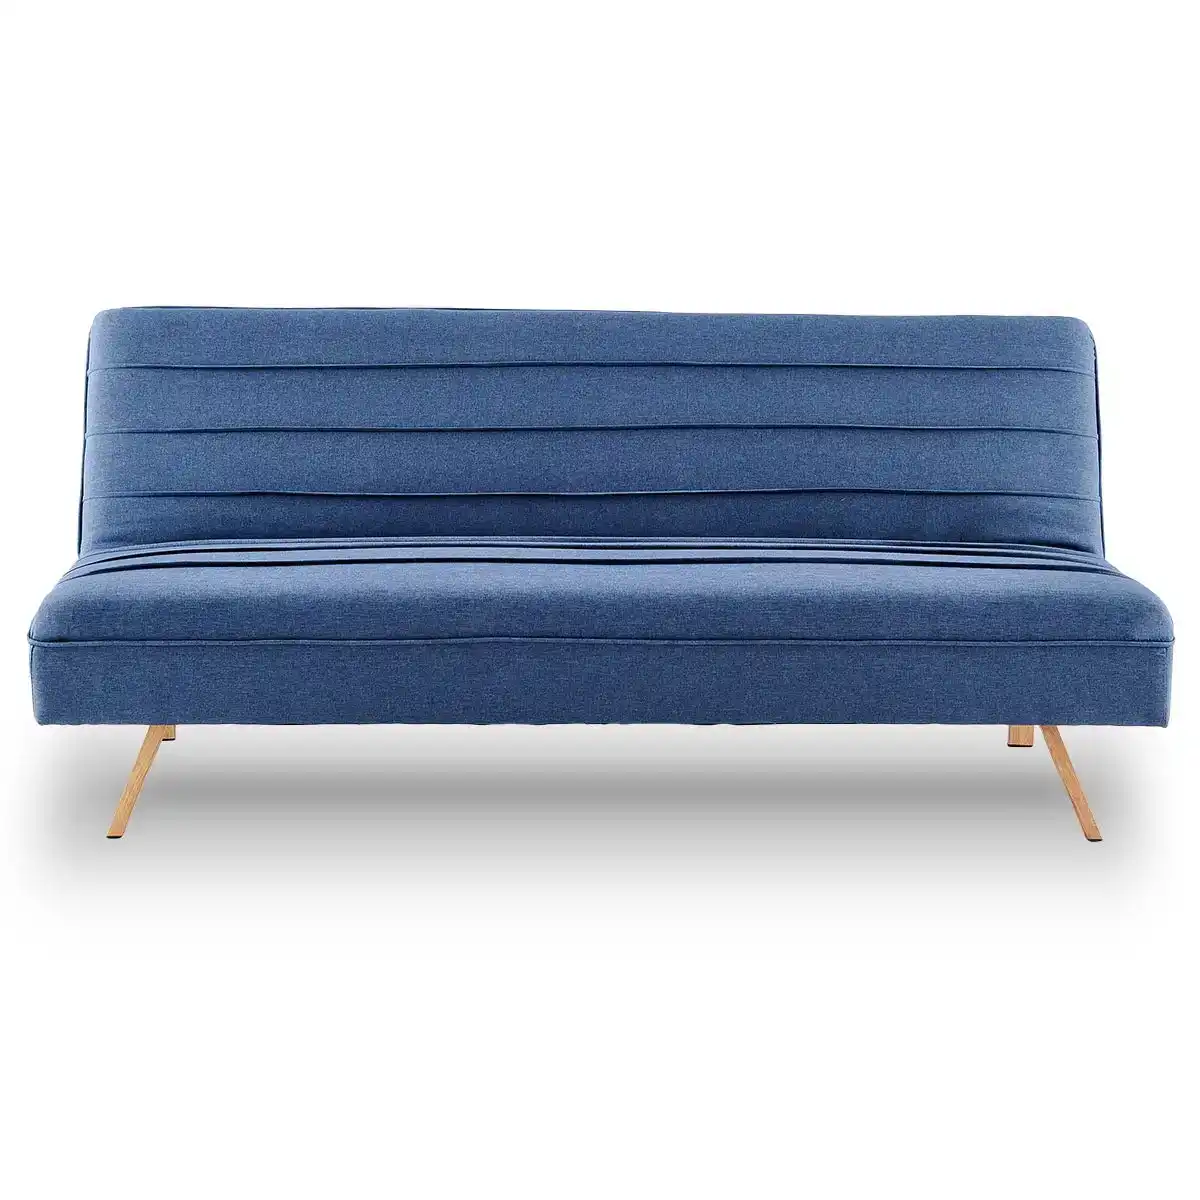 NNEDPE Sarantino 3 Seater Modular Linen Fabric Sofa Bed Couch  - Dark Blue